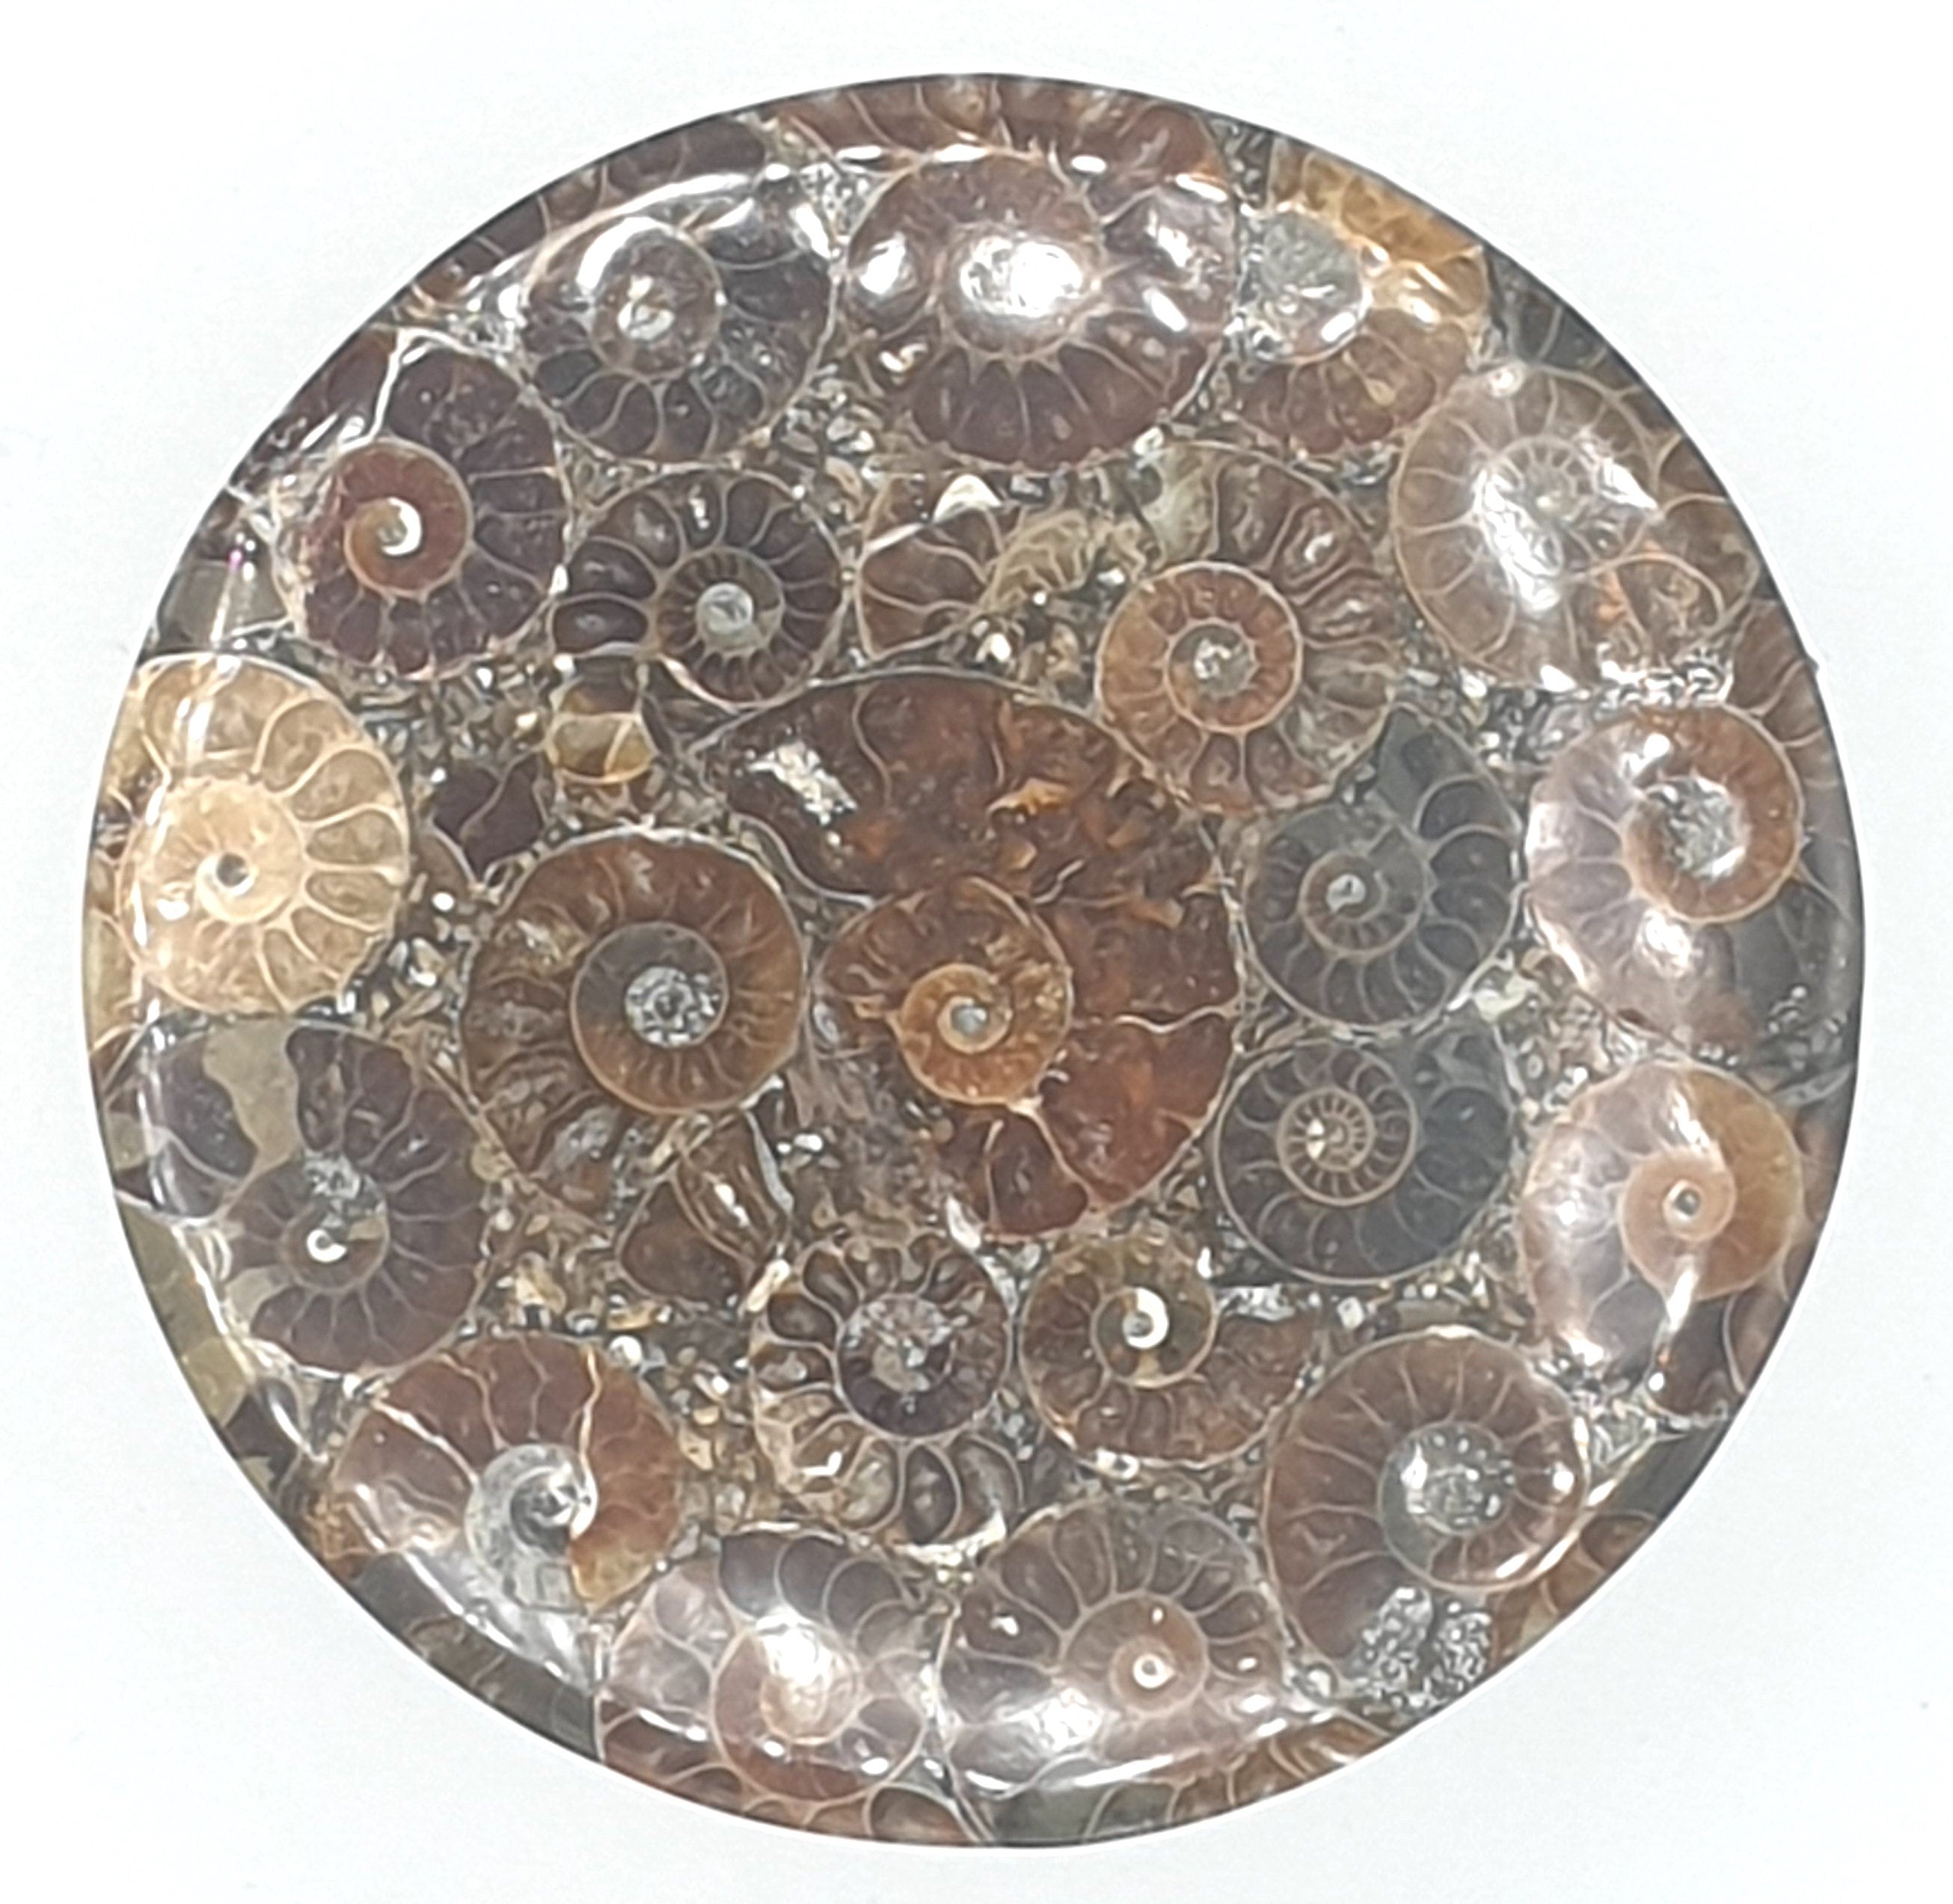 Plaque ronde d'ammonites de 7,5 cm décoration, sous verres Origine: Madagascar